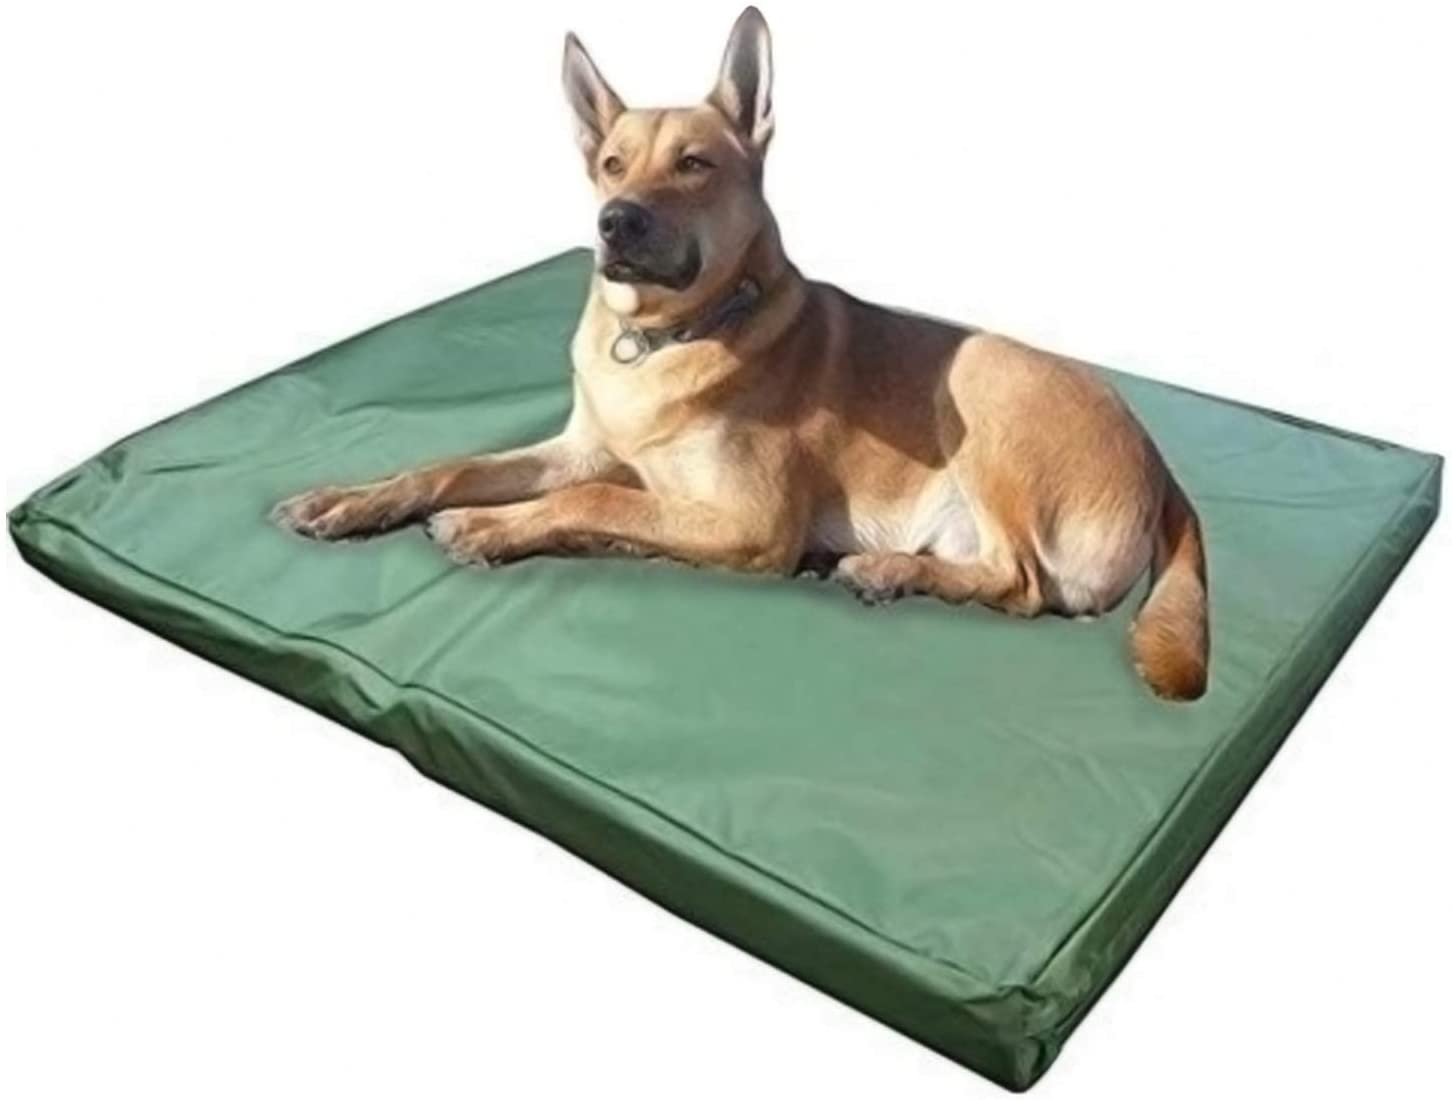  ADOV Cama Perro Lavable Medianos, 84 x 54 x 5cm Impermeable Doble Cara Dog Bed, Duradera, 6000D Oxford Ortopédica Gruesa Espuma Cama Mascota, Colchón Perros S/M/XS, Gatos - Mediano 